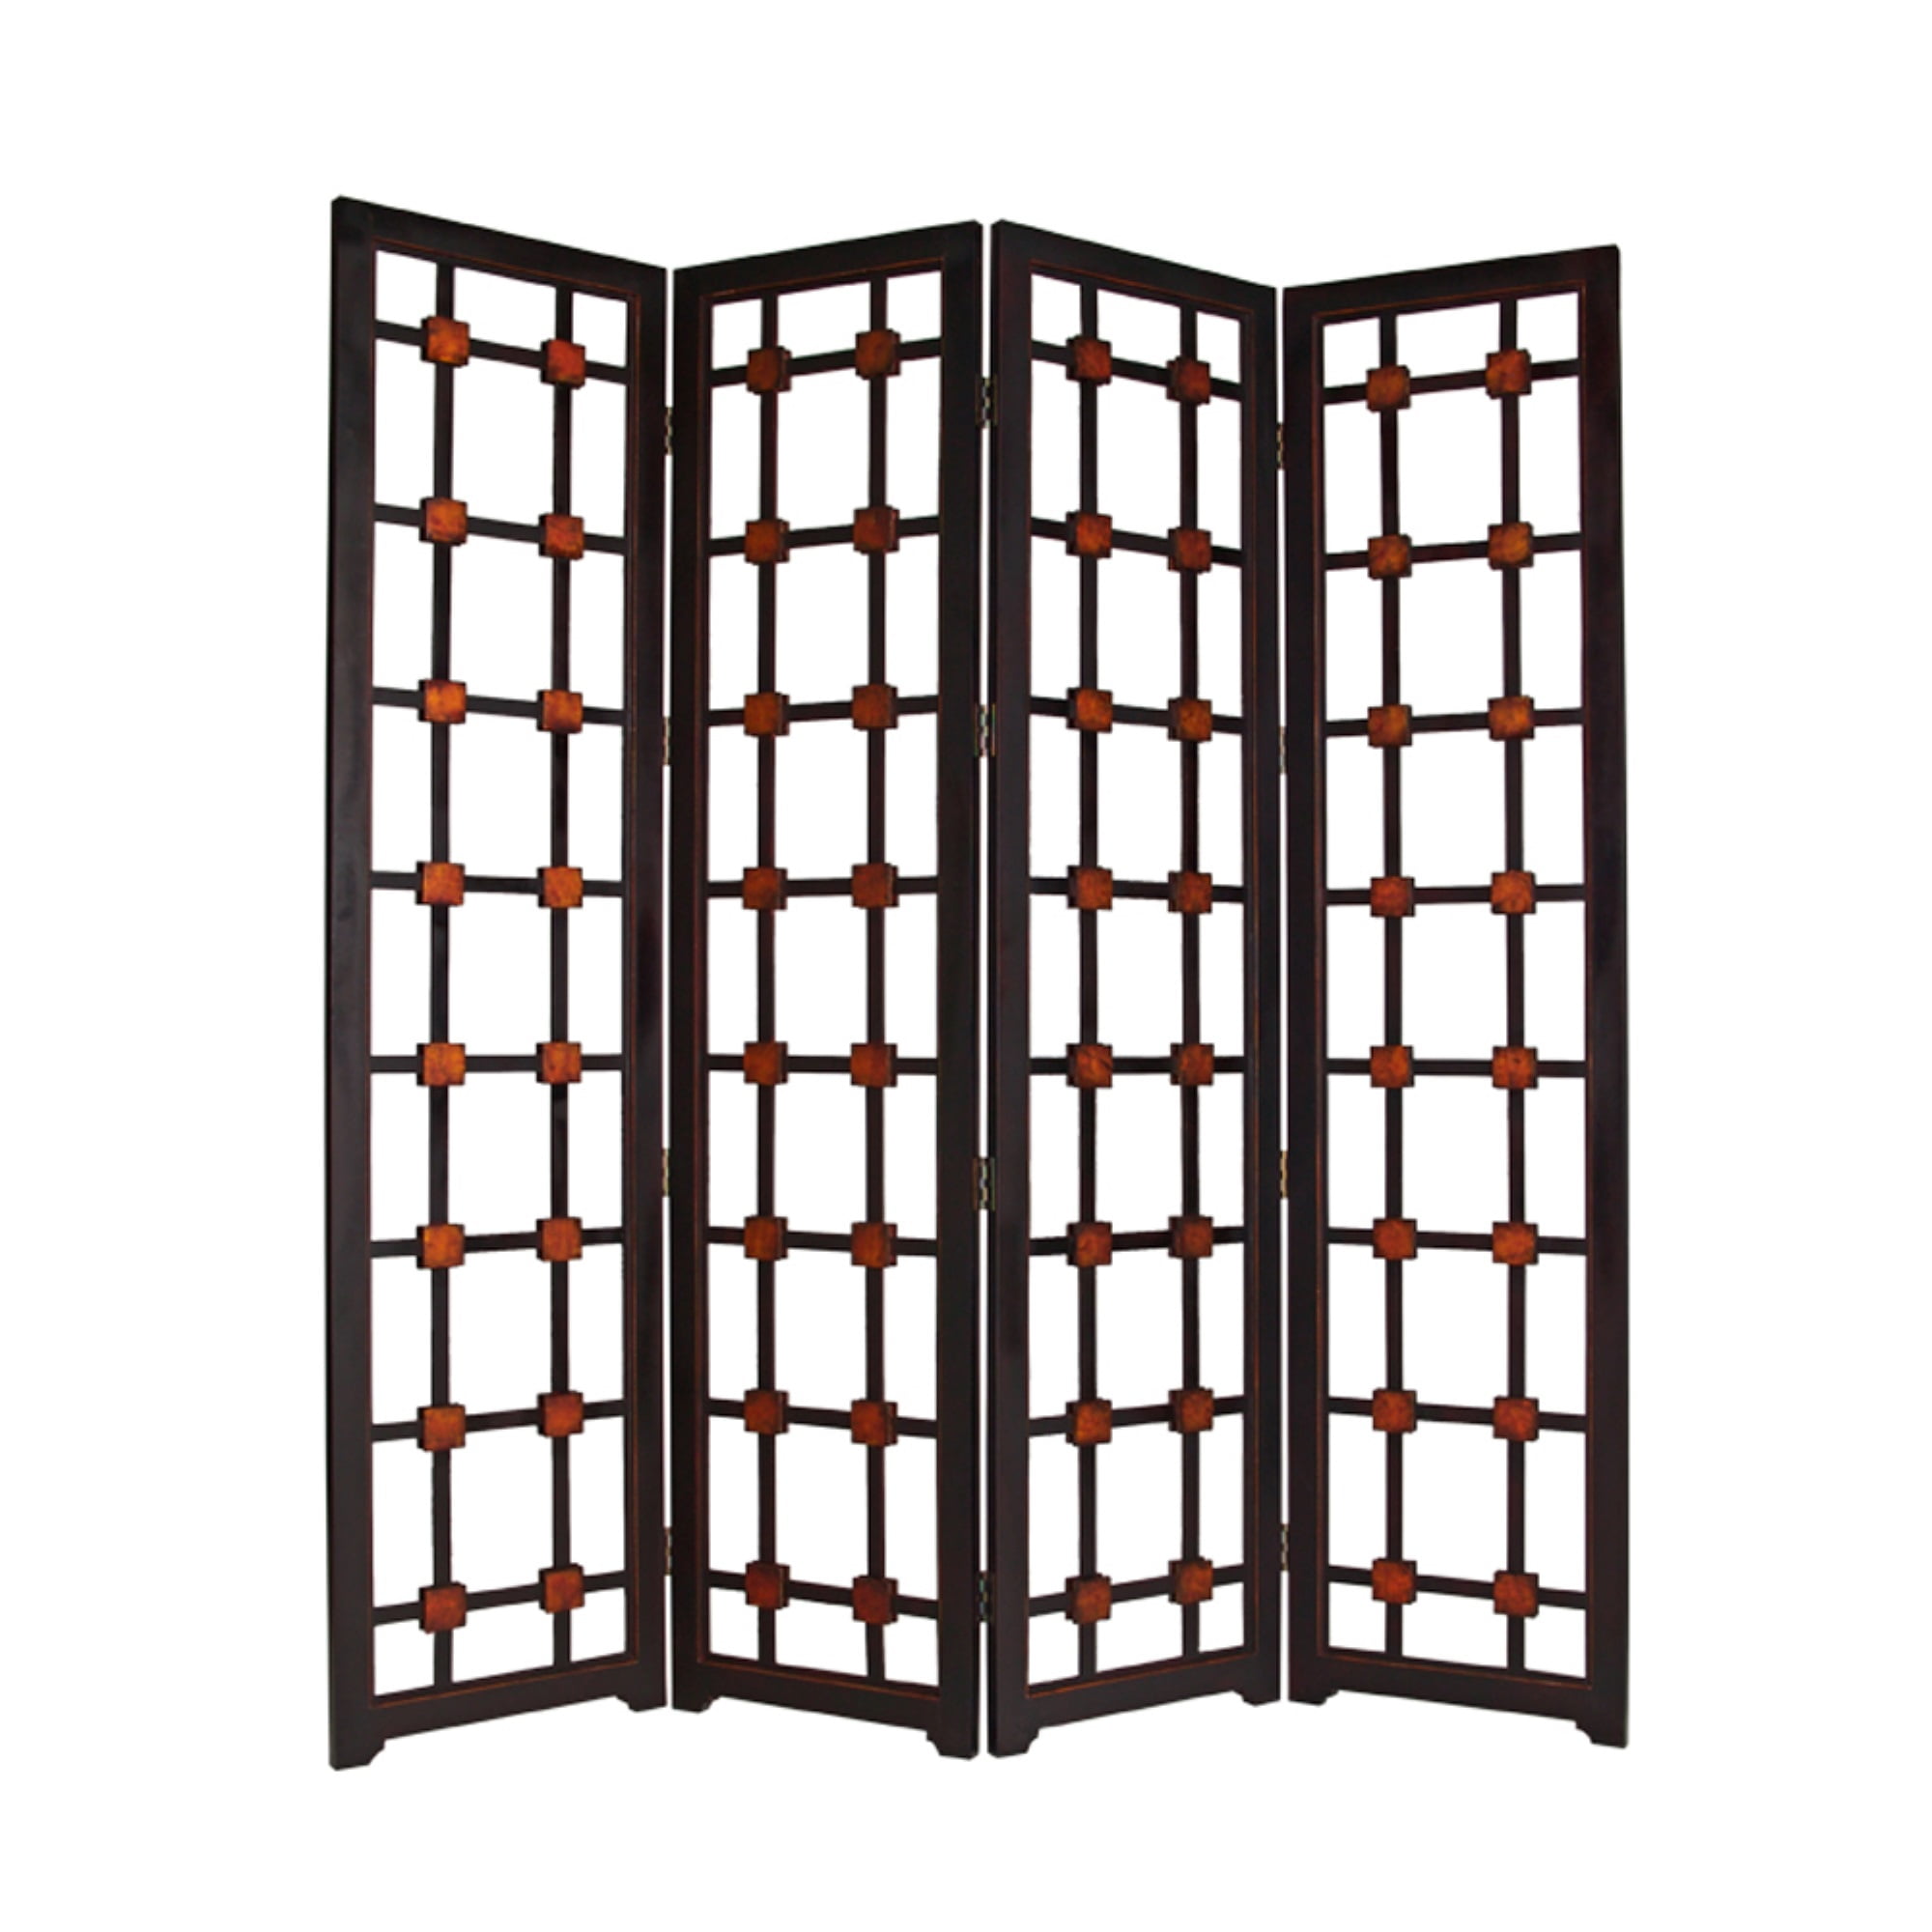 Bm205941 Wooden 4 Panel Screen With Modern Cosmopolitan Design, Black & Red